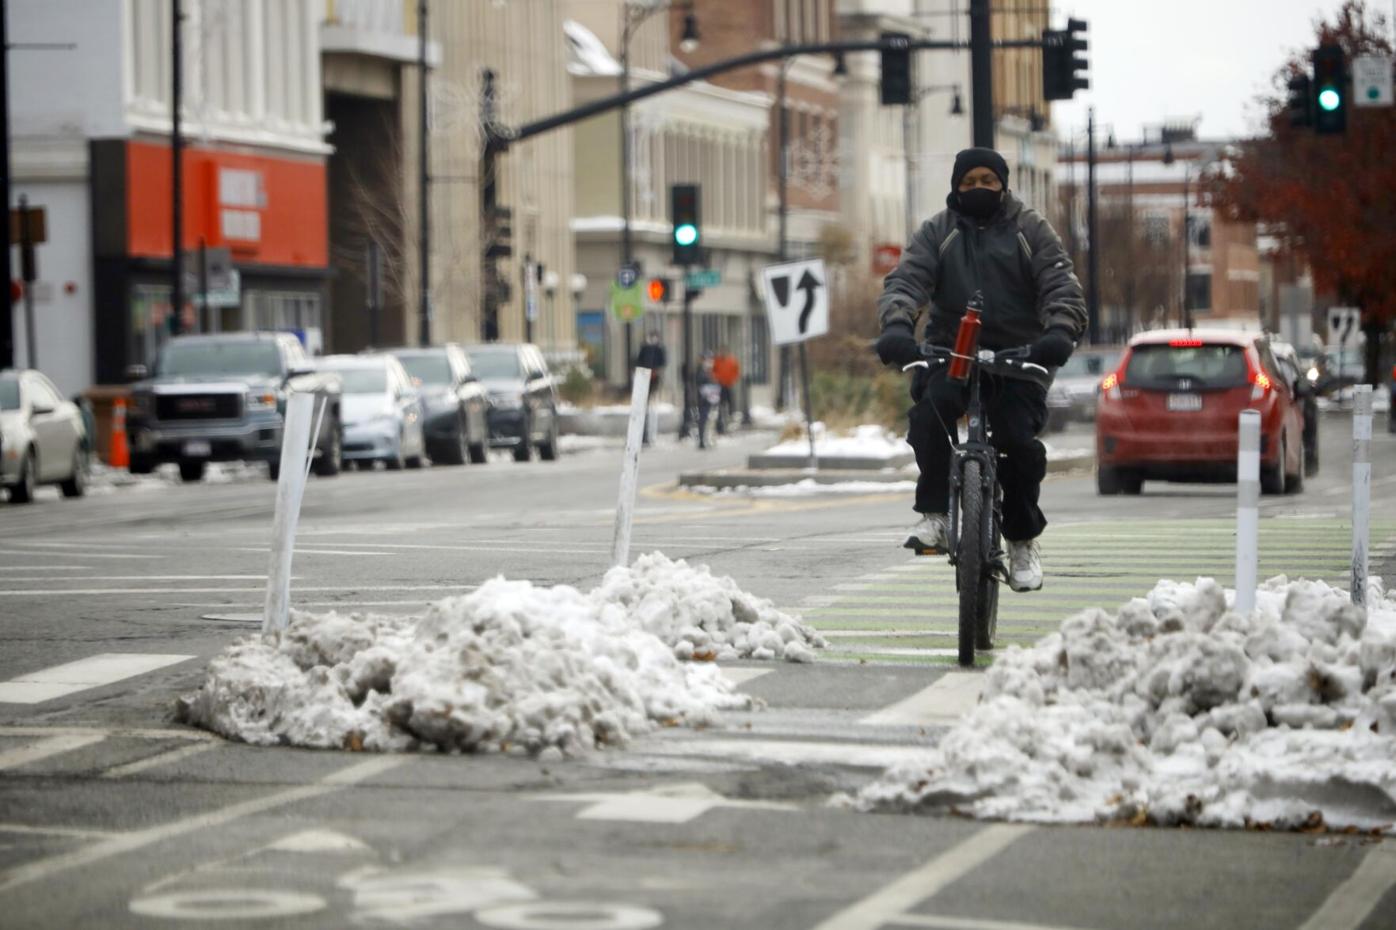 bicyclist rides in bike lane on north street (copy)